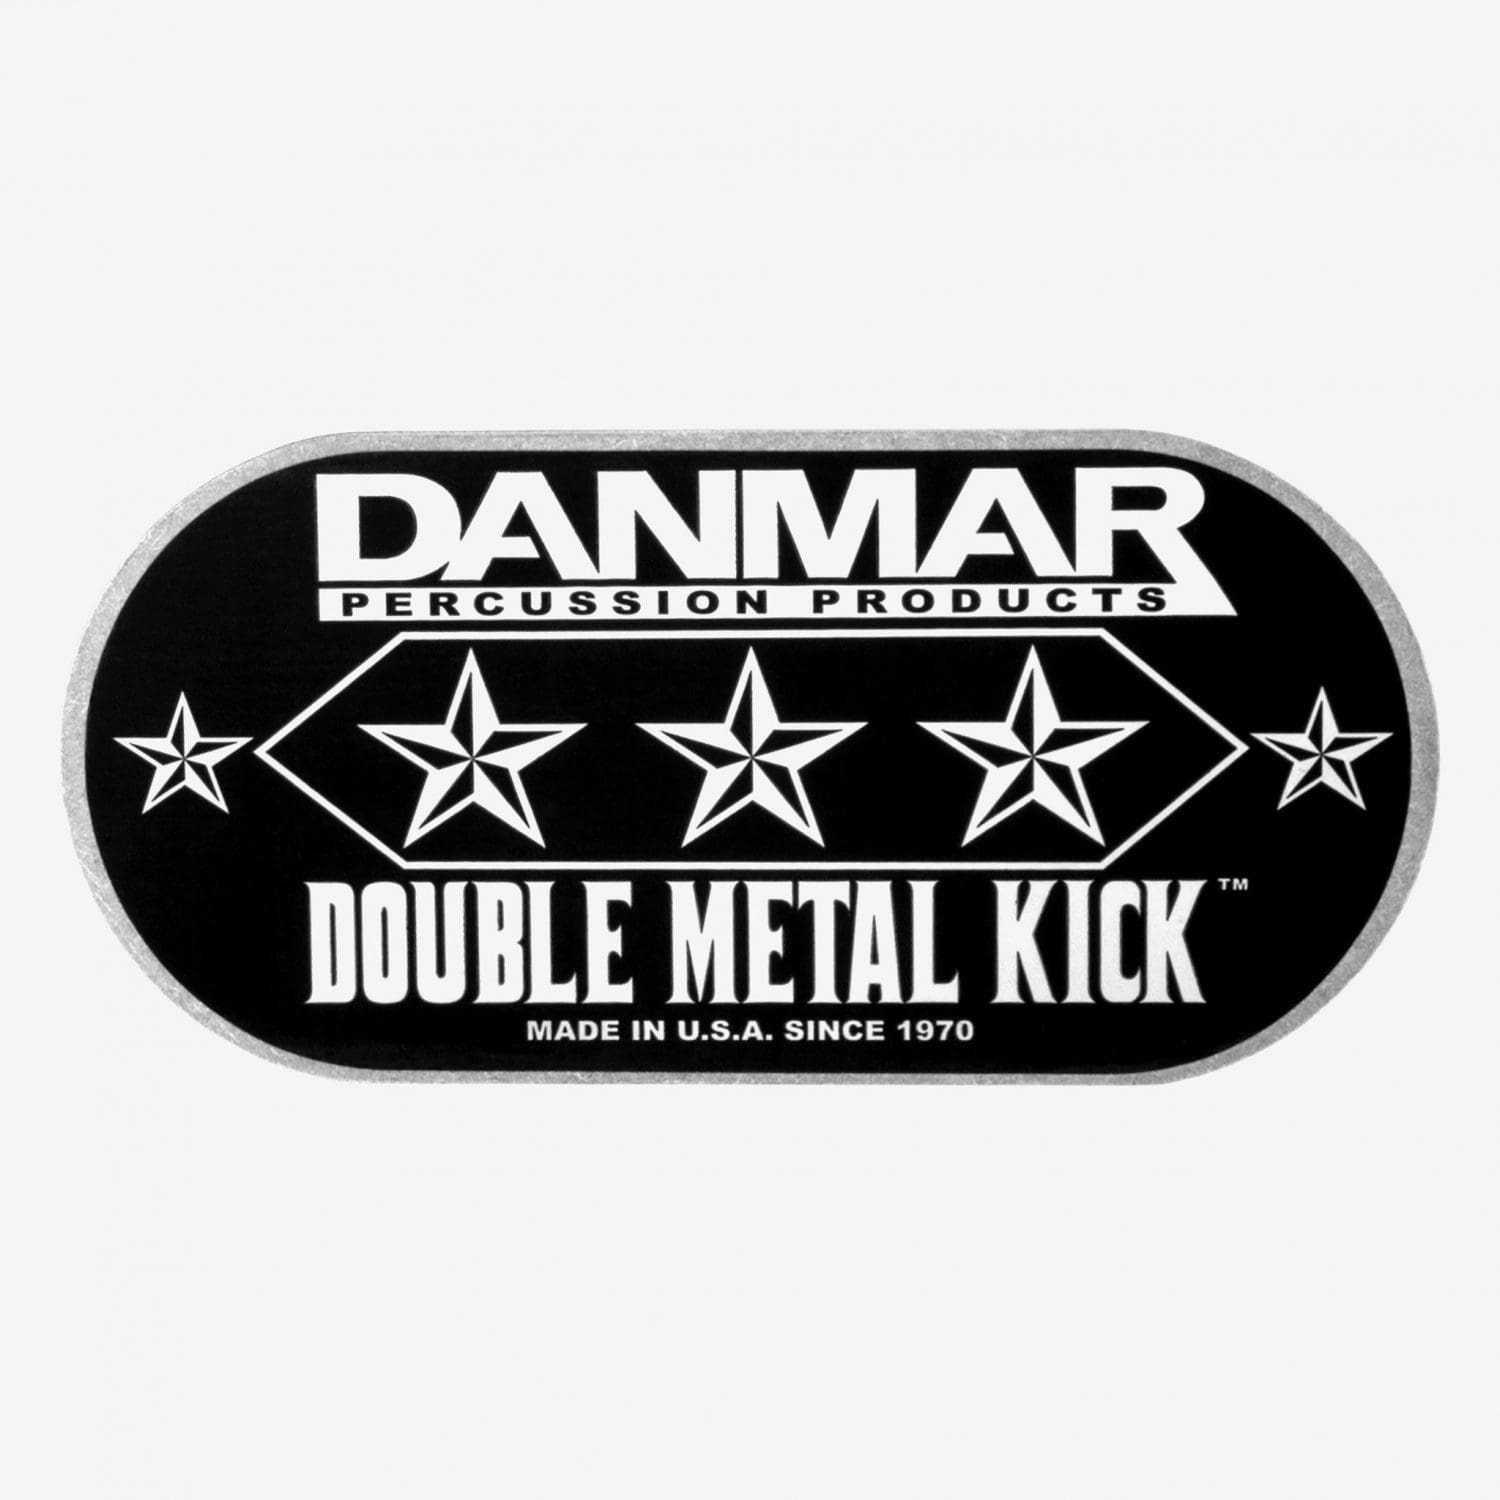 Double Metal Kick Bass Drum Disc